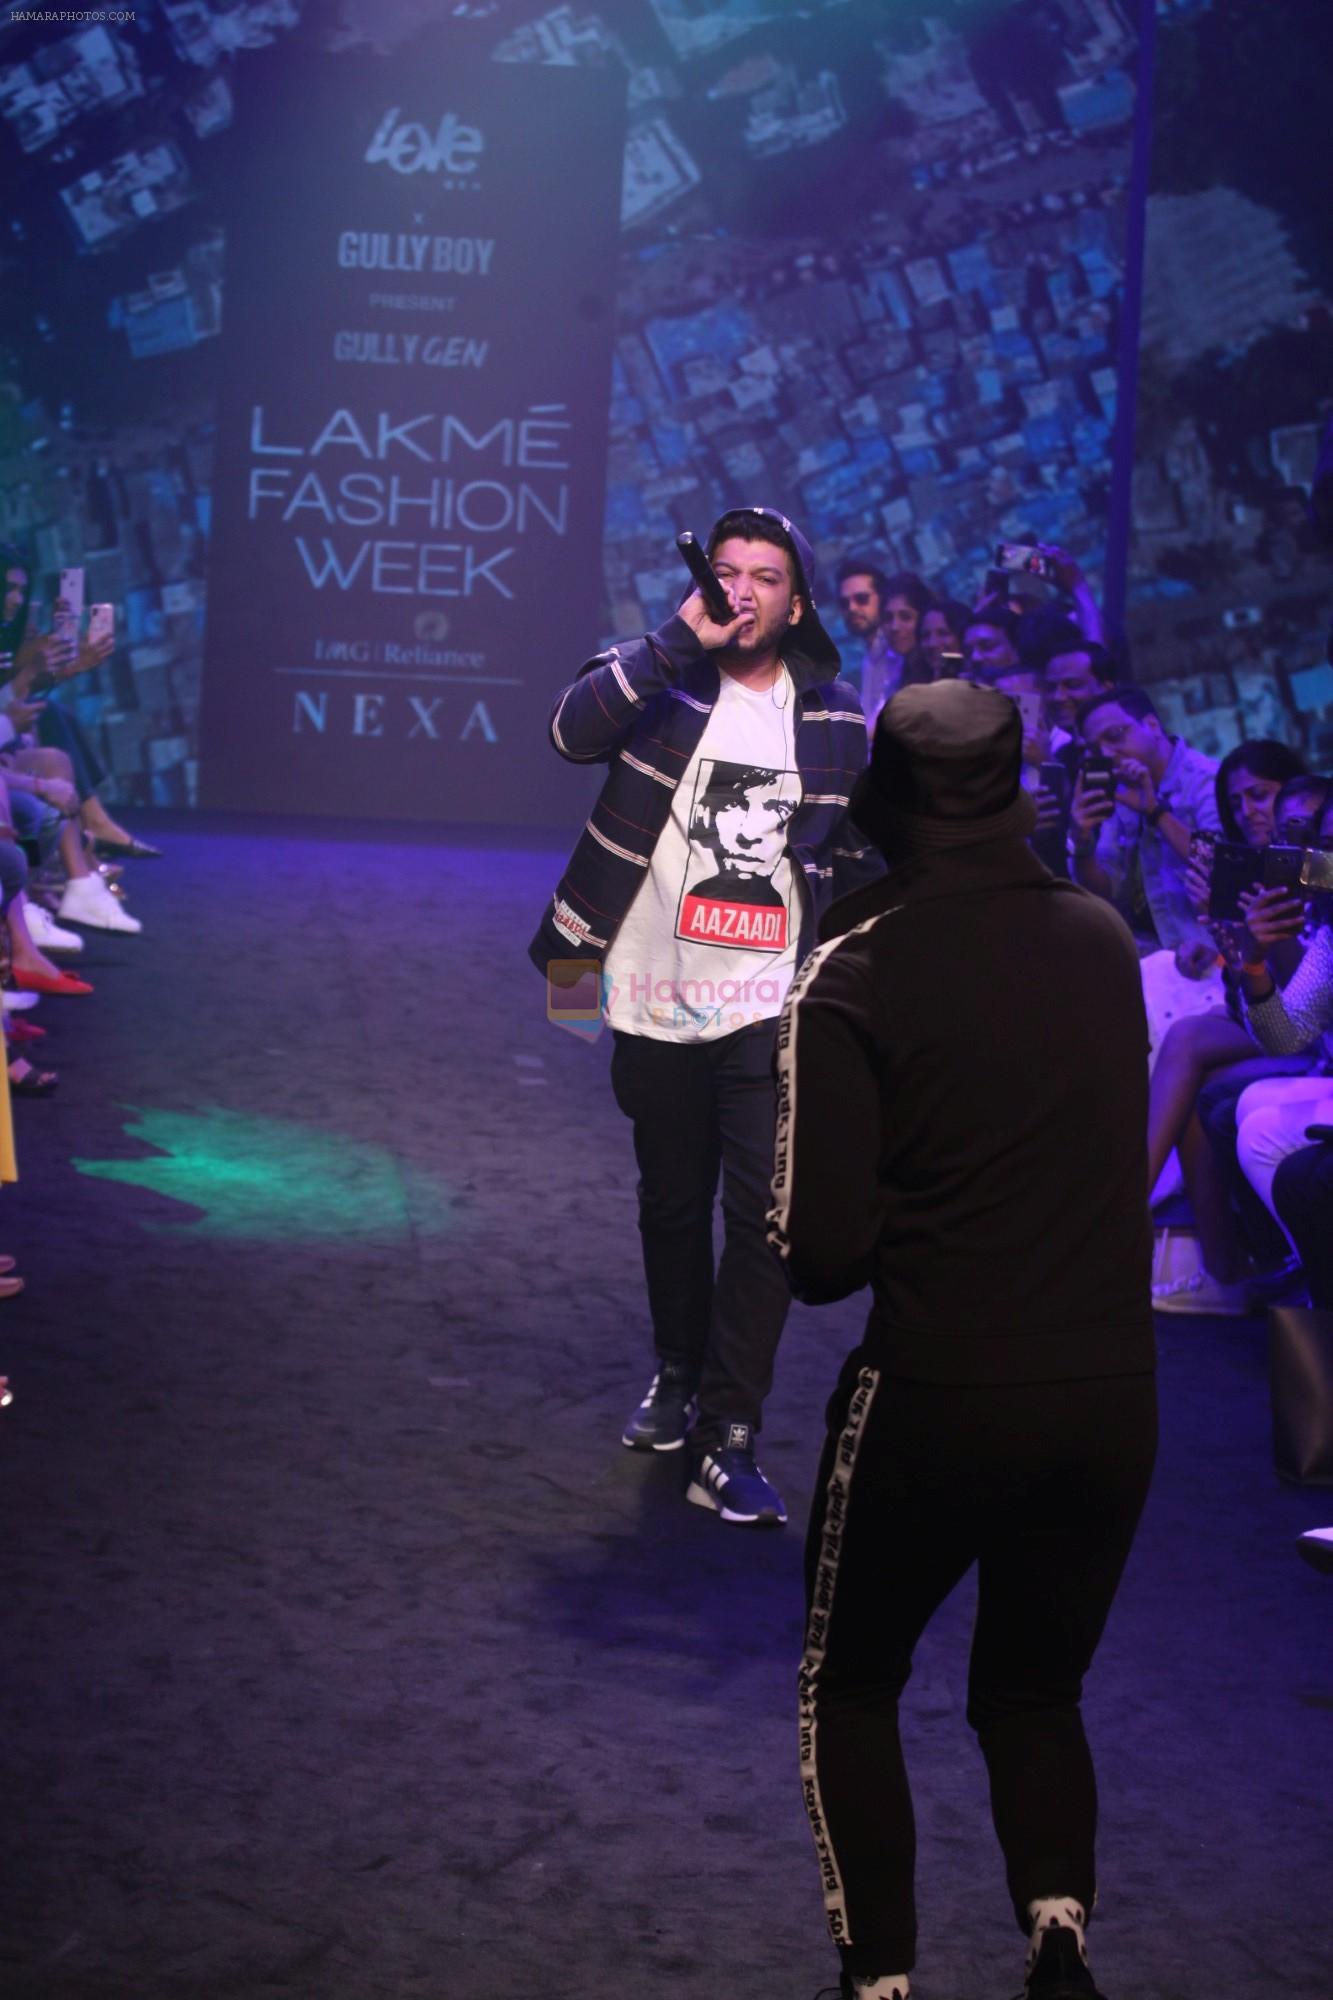 Ranveer Singh Walks Ramp for Gully Gen Studio 2 at  Lakme Fashion Week 2019 on 3rd Feb 2019